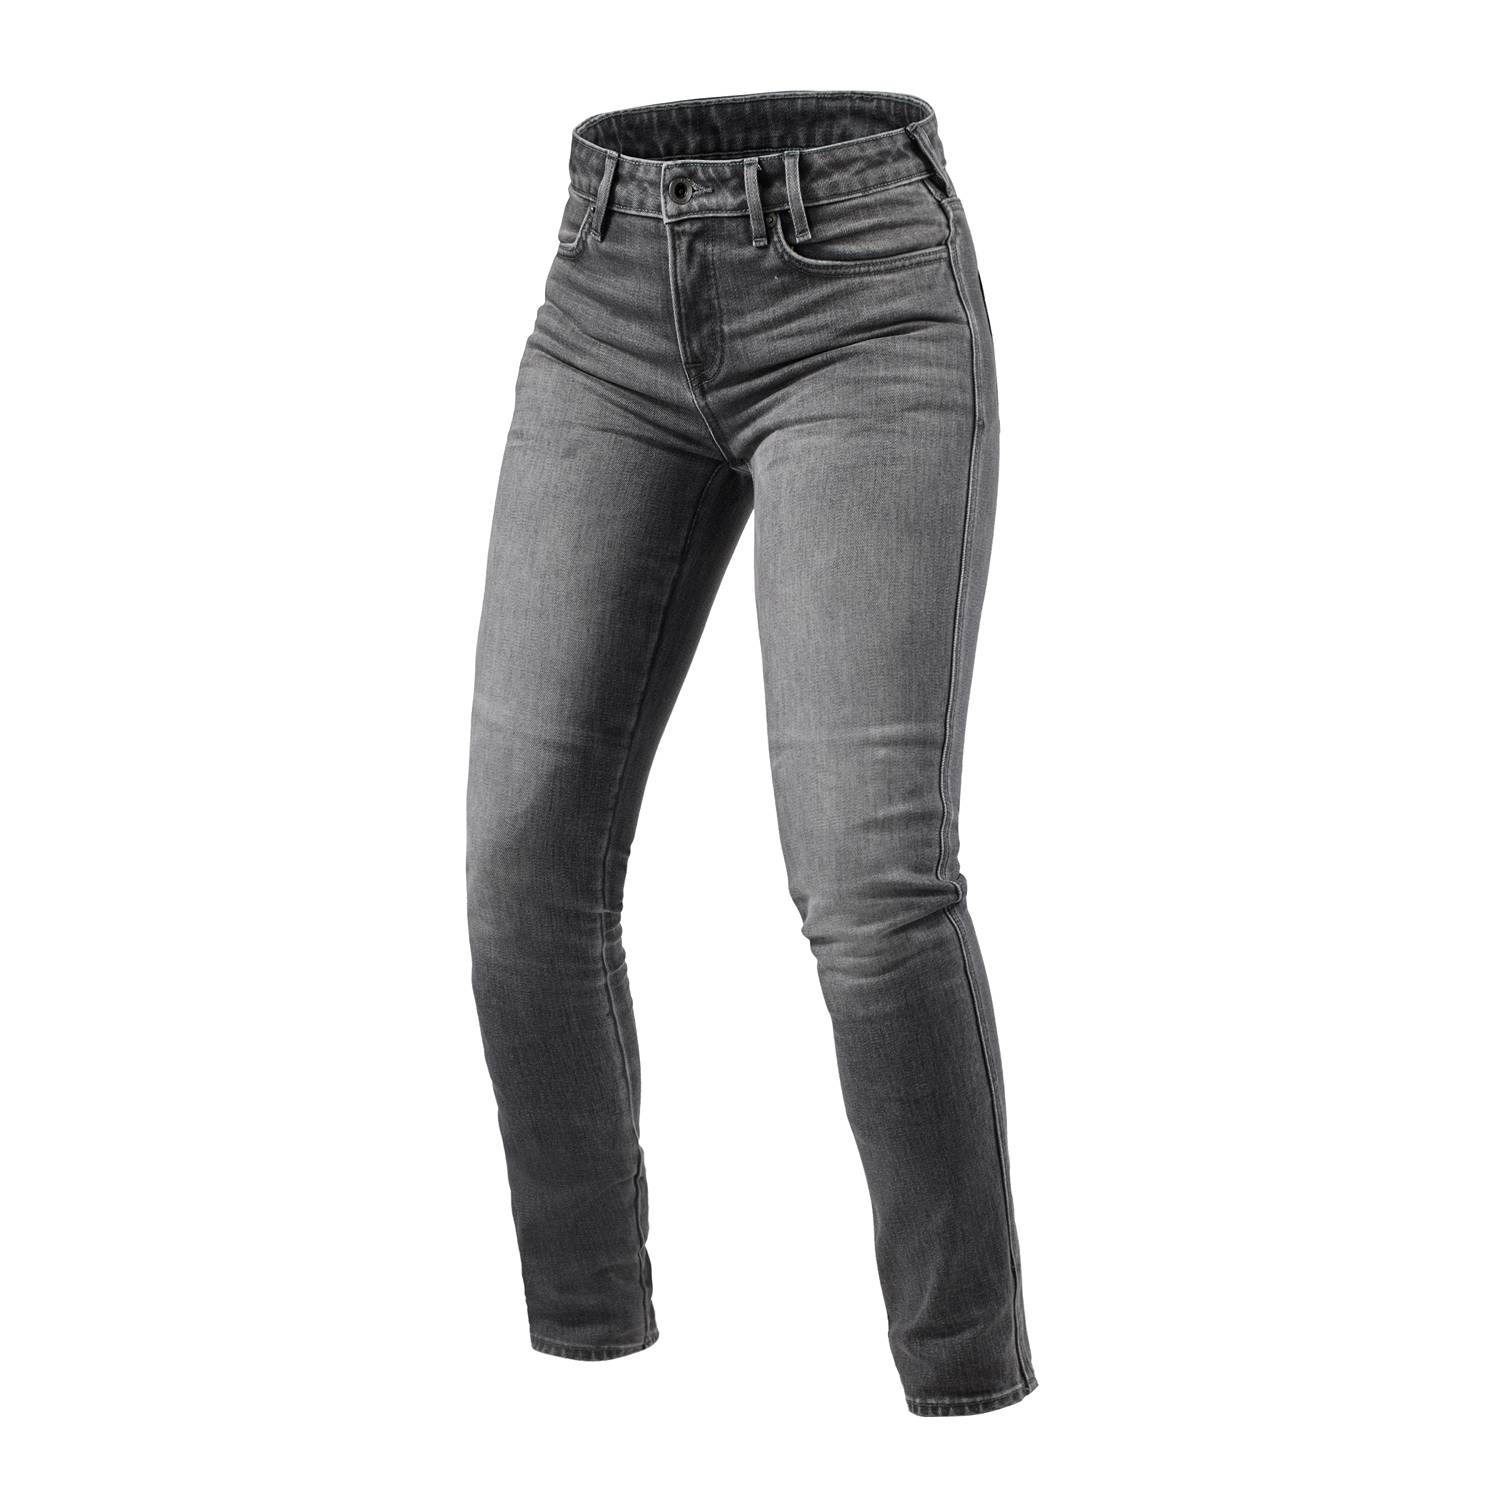 Image of REV'IT! Jeans Shelby 2 Ladies SK Medium Grey Stone L32 Size L32/W24 ID 8700001376594